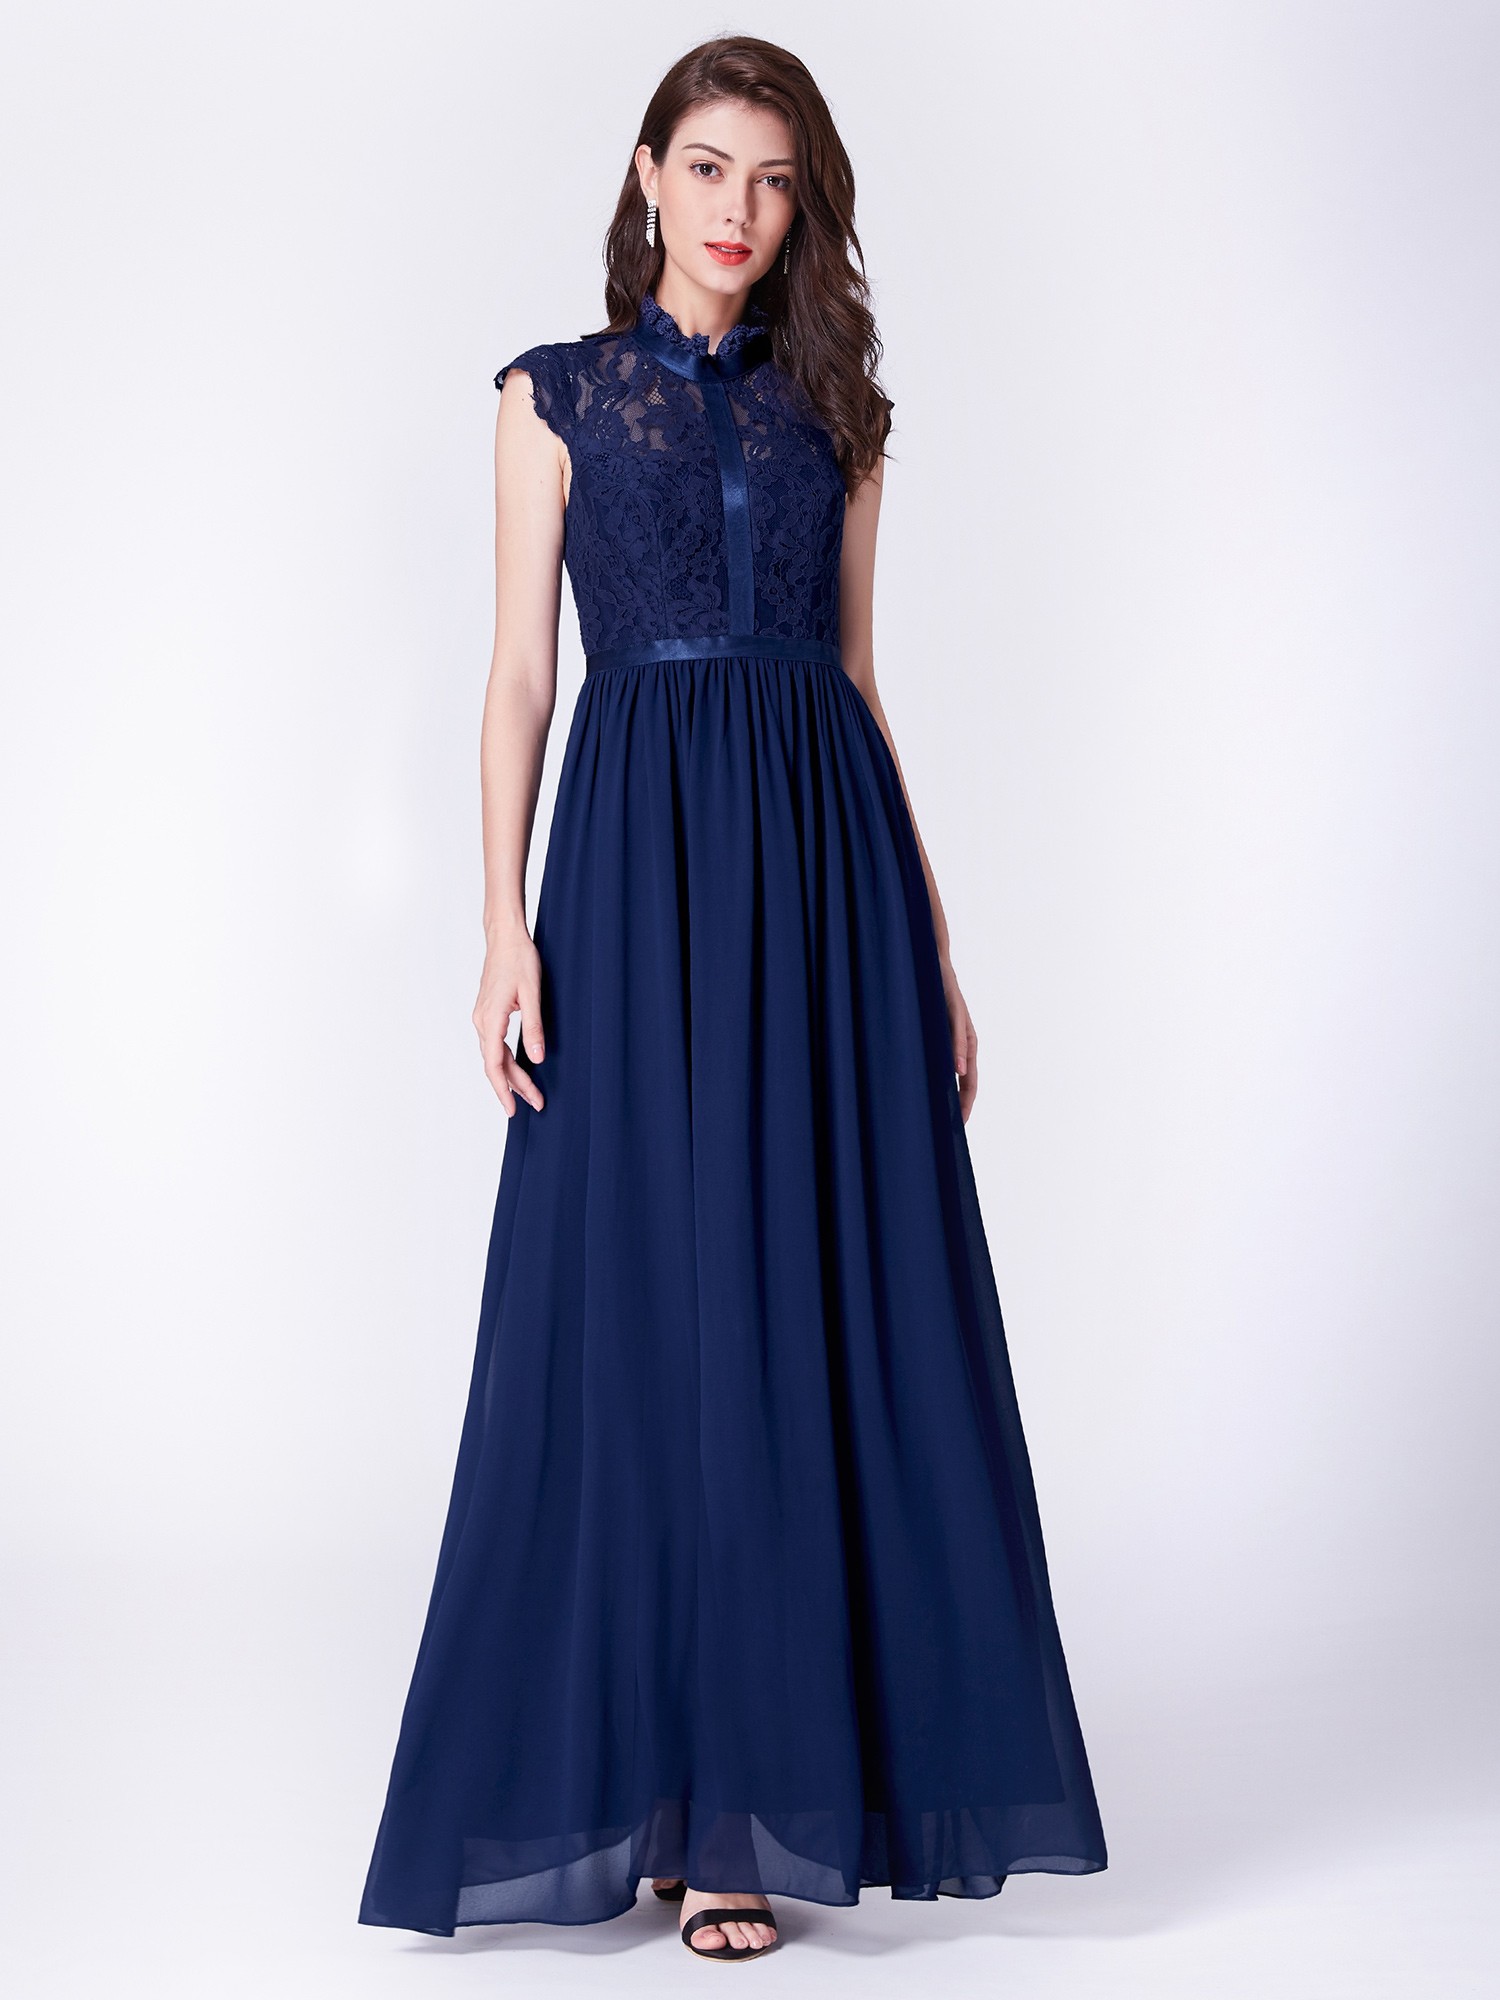 Evening Dress with Collar Collar long evening dress with lace high collar neckline WZTAYWX